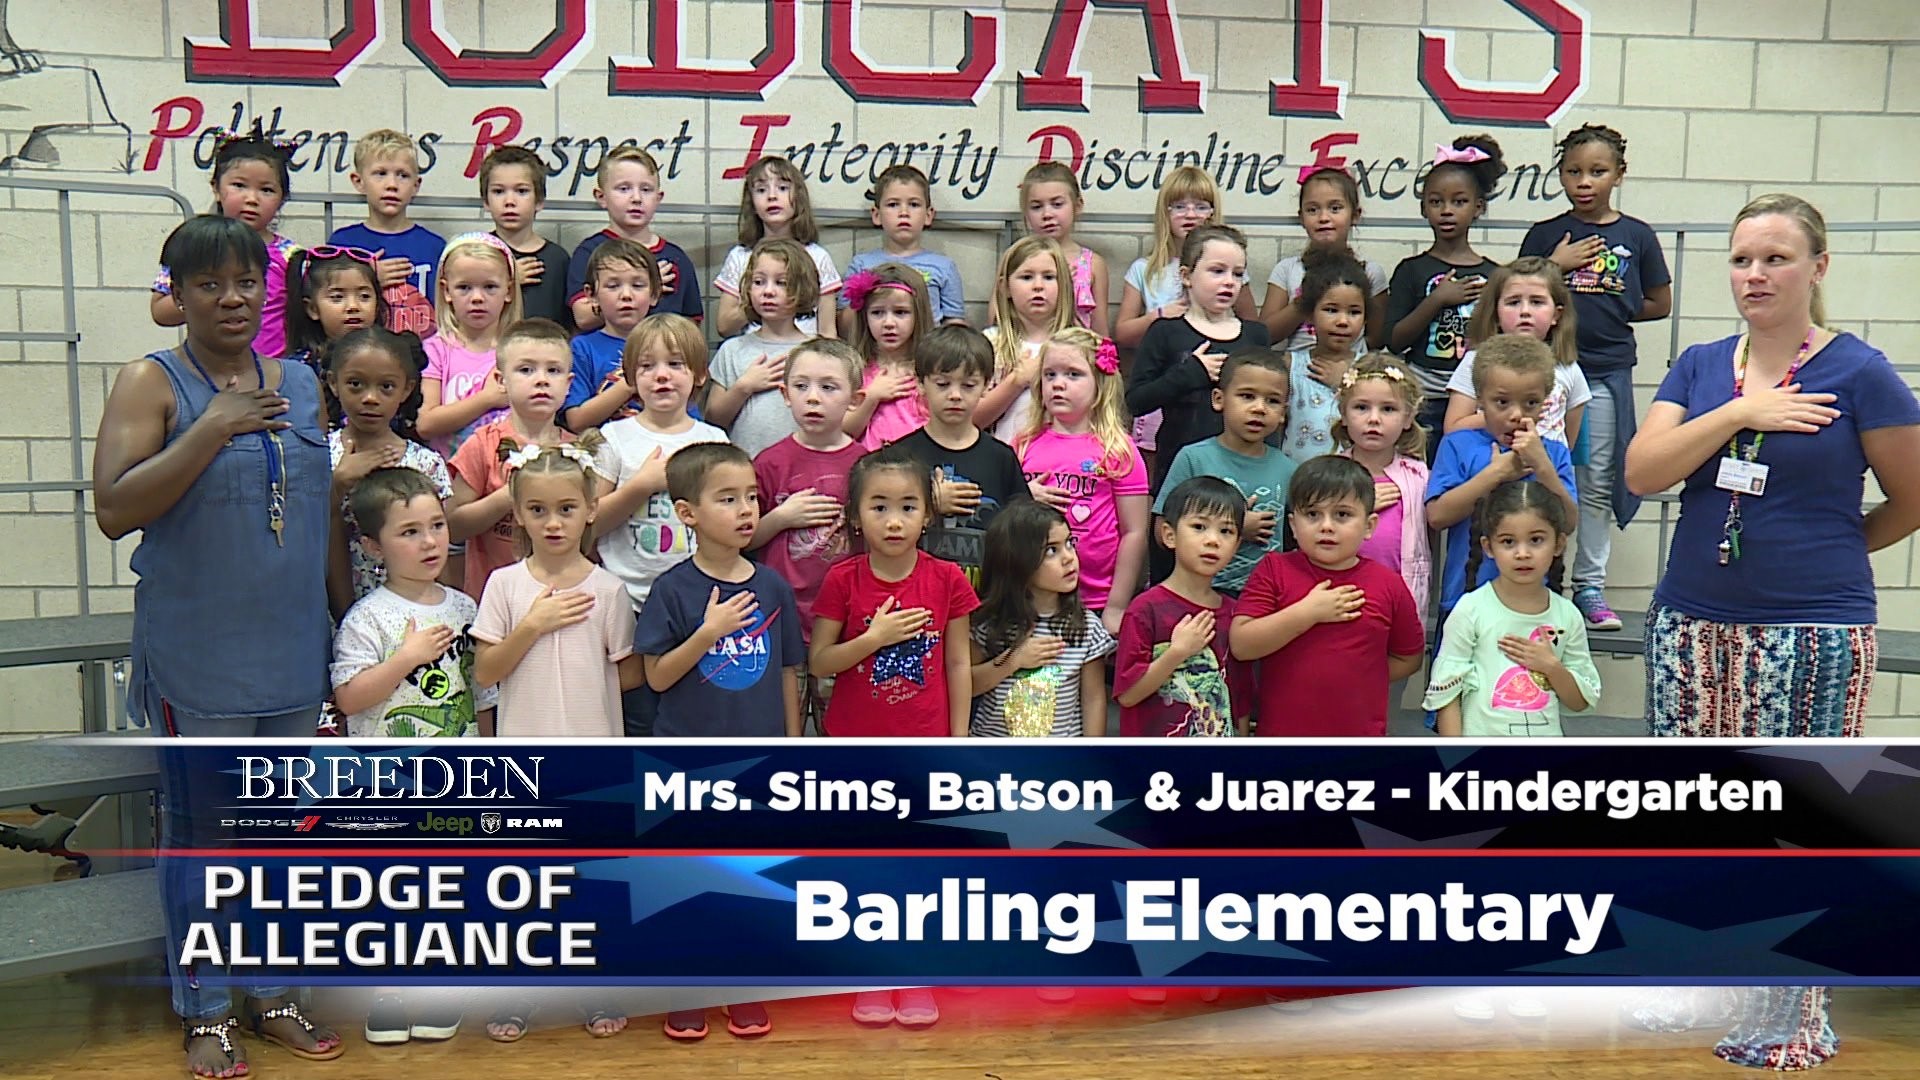 Mrs. Sims, Batson & Juarez  Kindergarten Barling Elementary